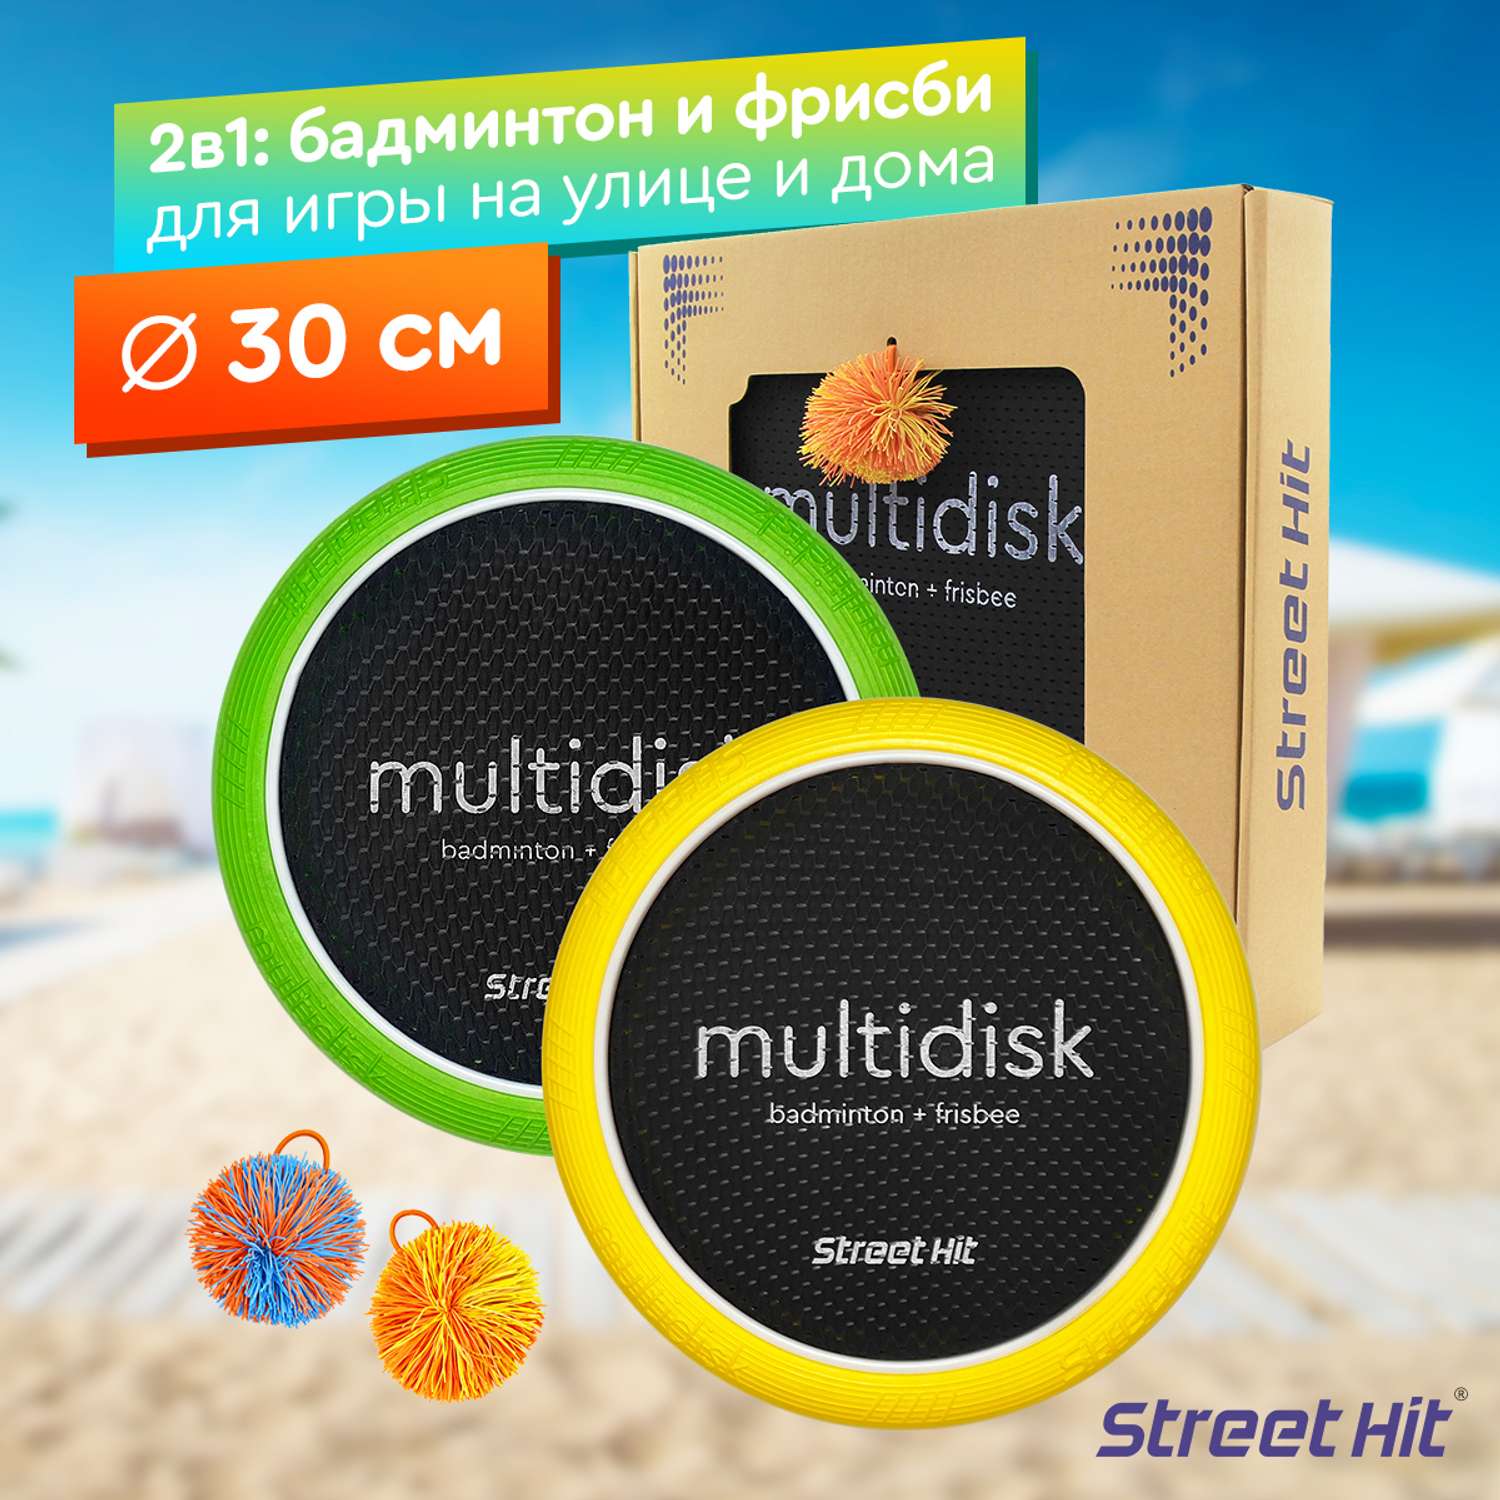 Набор для игры Street Hit Мультидиск Mini 30 см желто-зеленый - фото 1